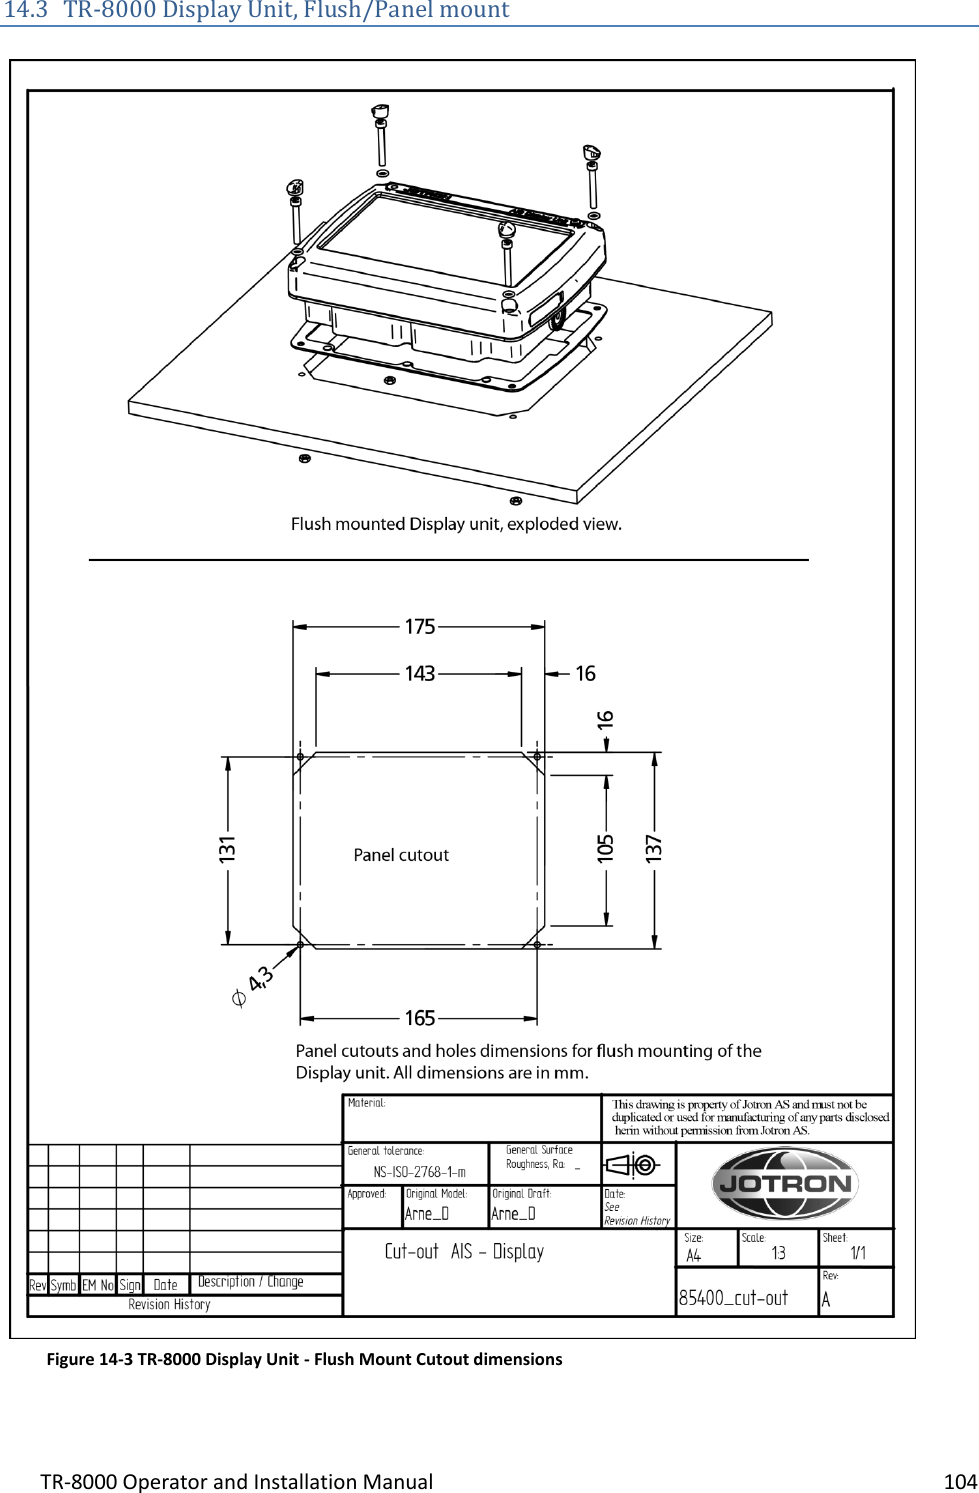 TR-8000 Operator and Installation Manual    104  14.3 TR-8000 Display Unit, Flush/Panel mount     Figure 14-3 TR-8000 Display Unit - Flush Mount Cutout dimensions 